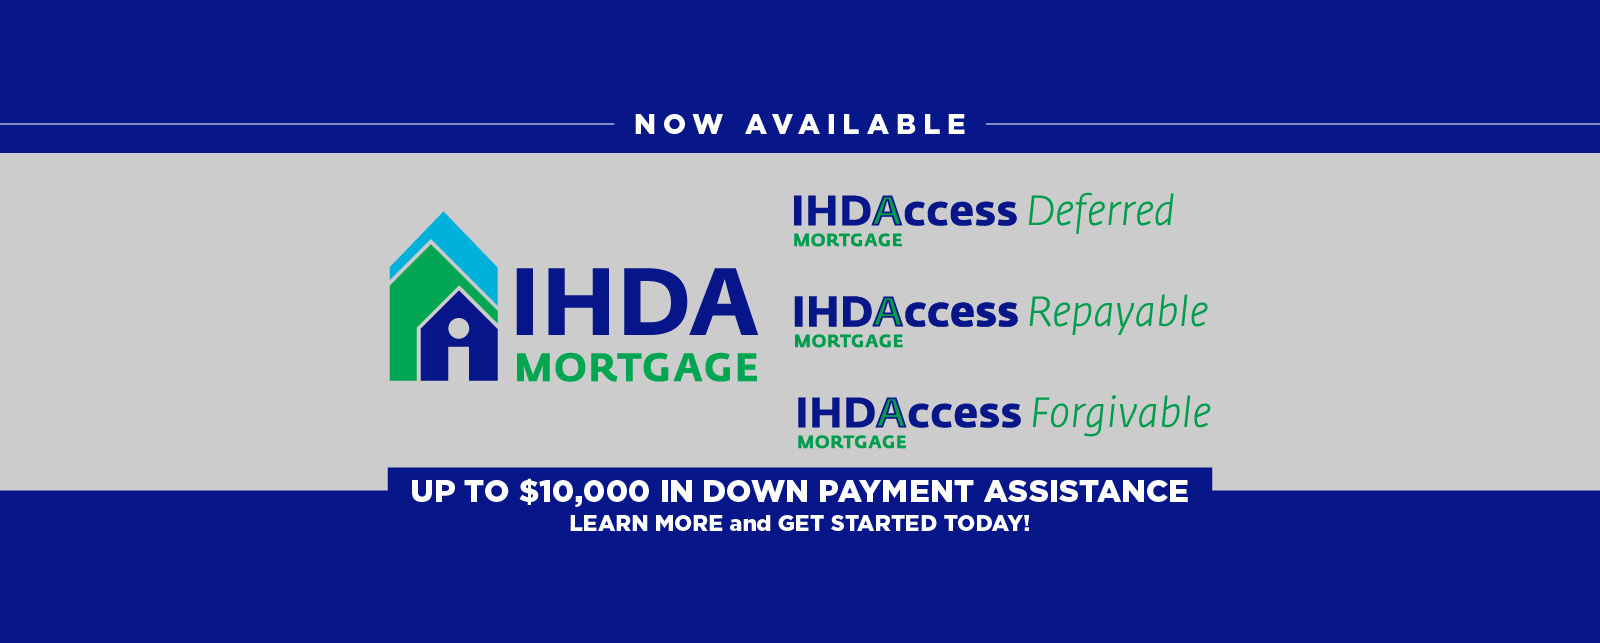 IHDA Mortgage Slide01 IHDA